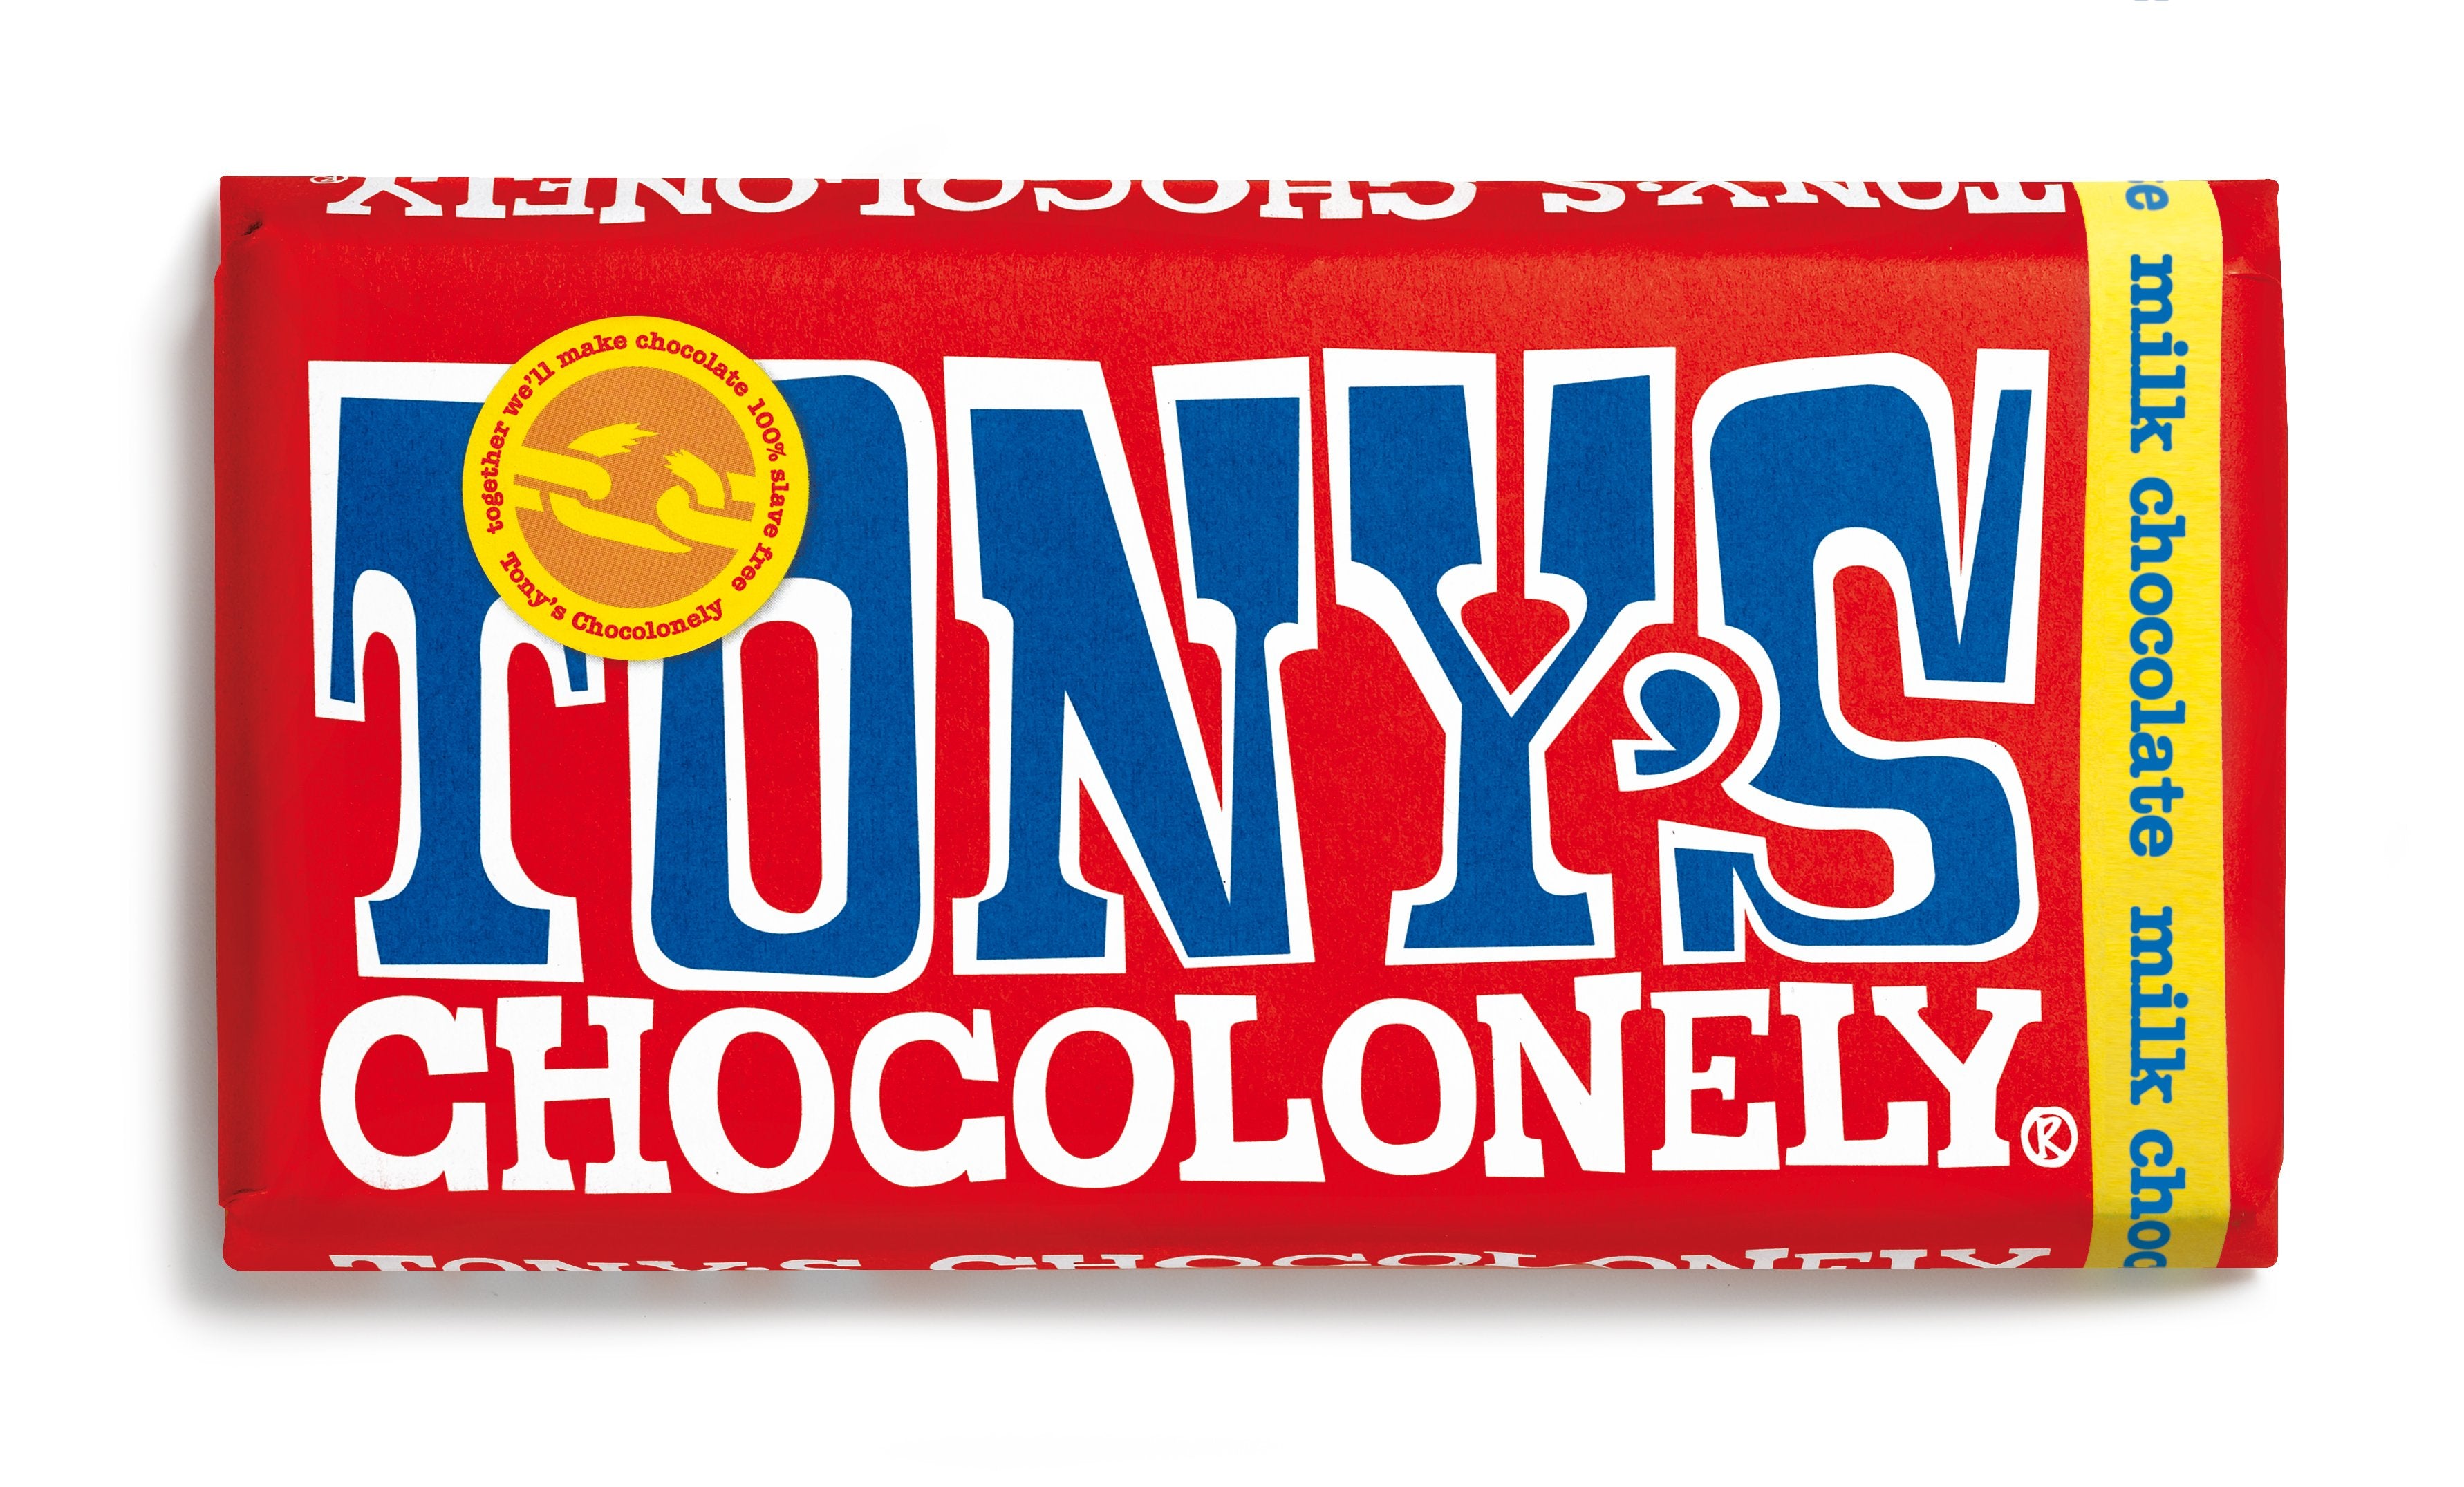 Tonys Chocolonely - Fairtrade Milk Chocolate // Stores Supply // Tony's Chocolonely